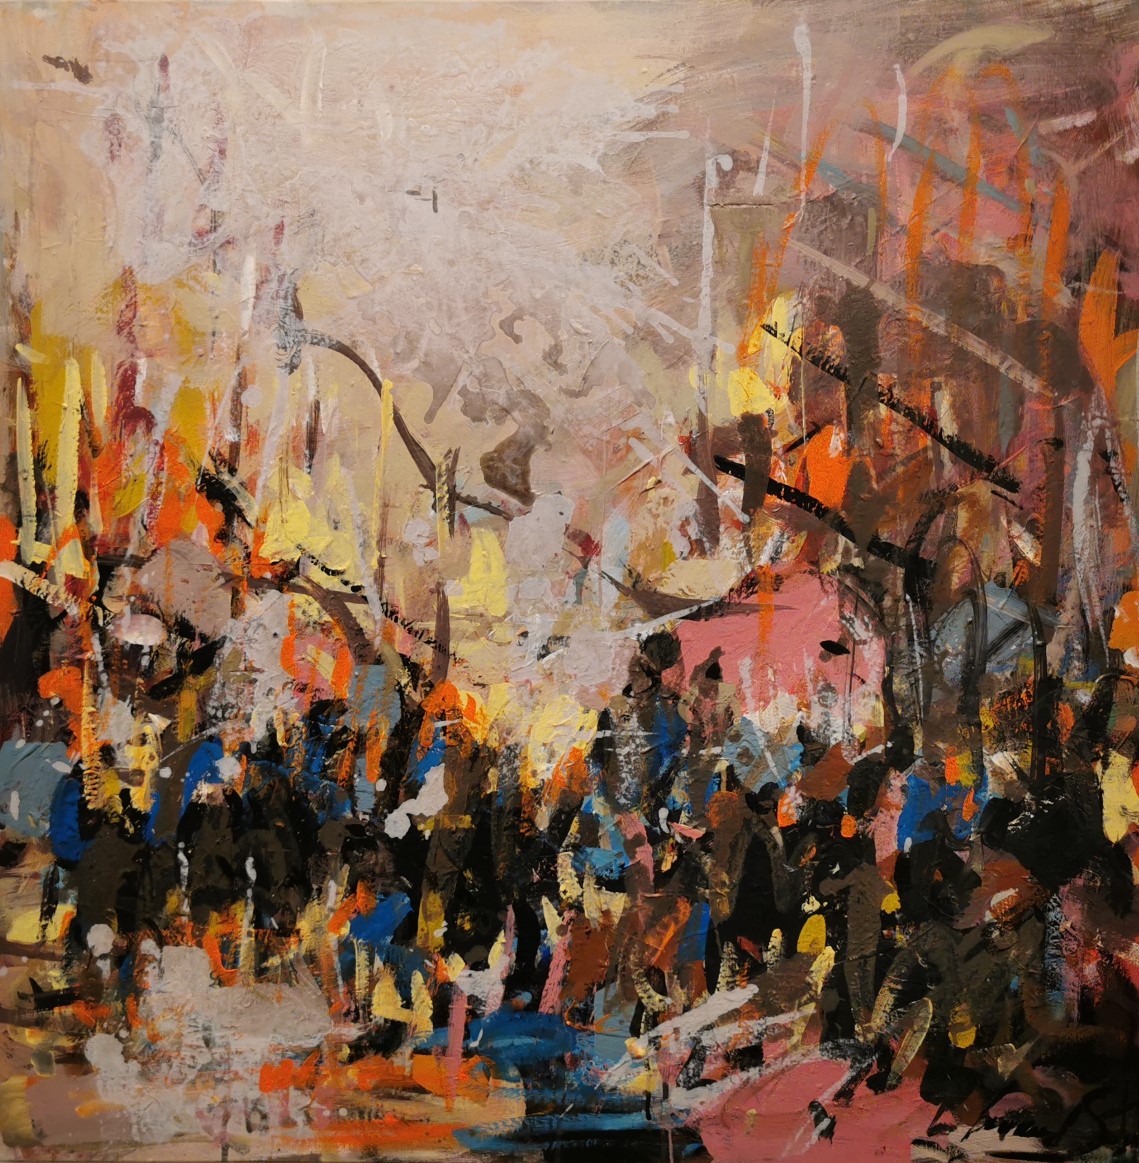 City rush by Leonard Sexton